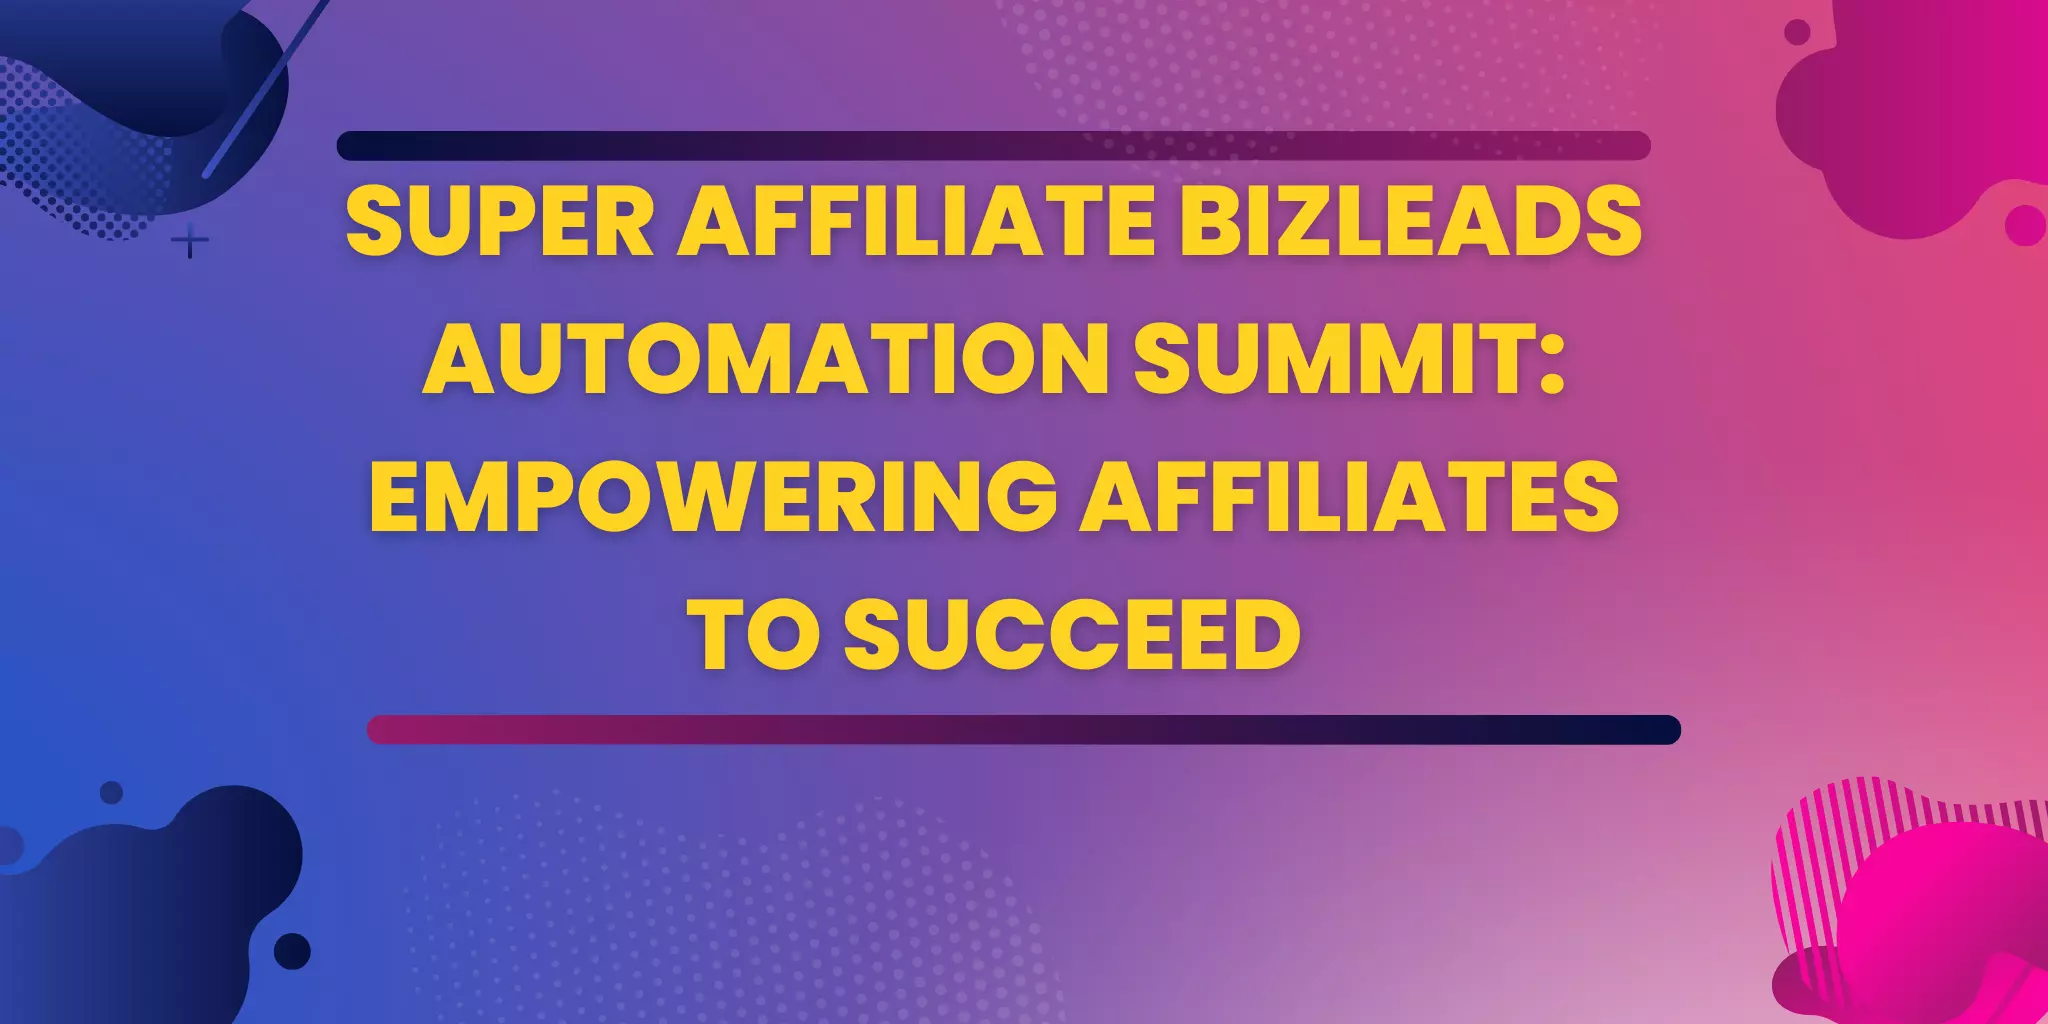 Super Affiliate Bizleads Automation Summit Empowering Affiliates to Succeed